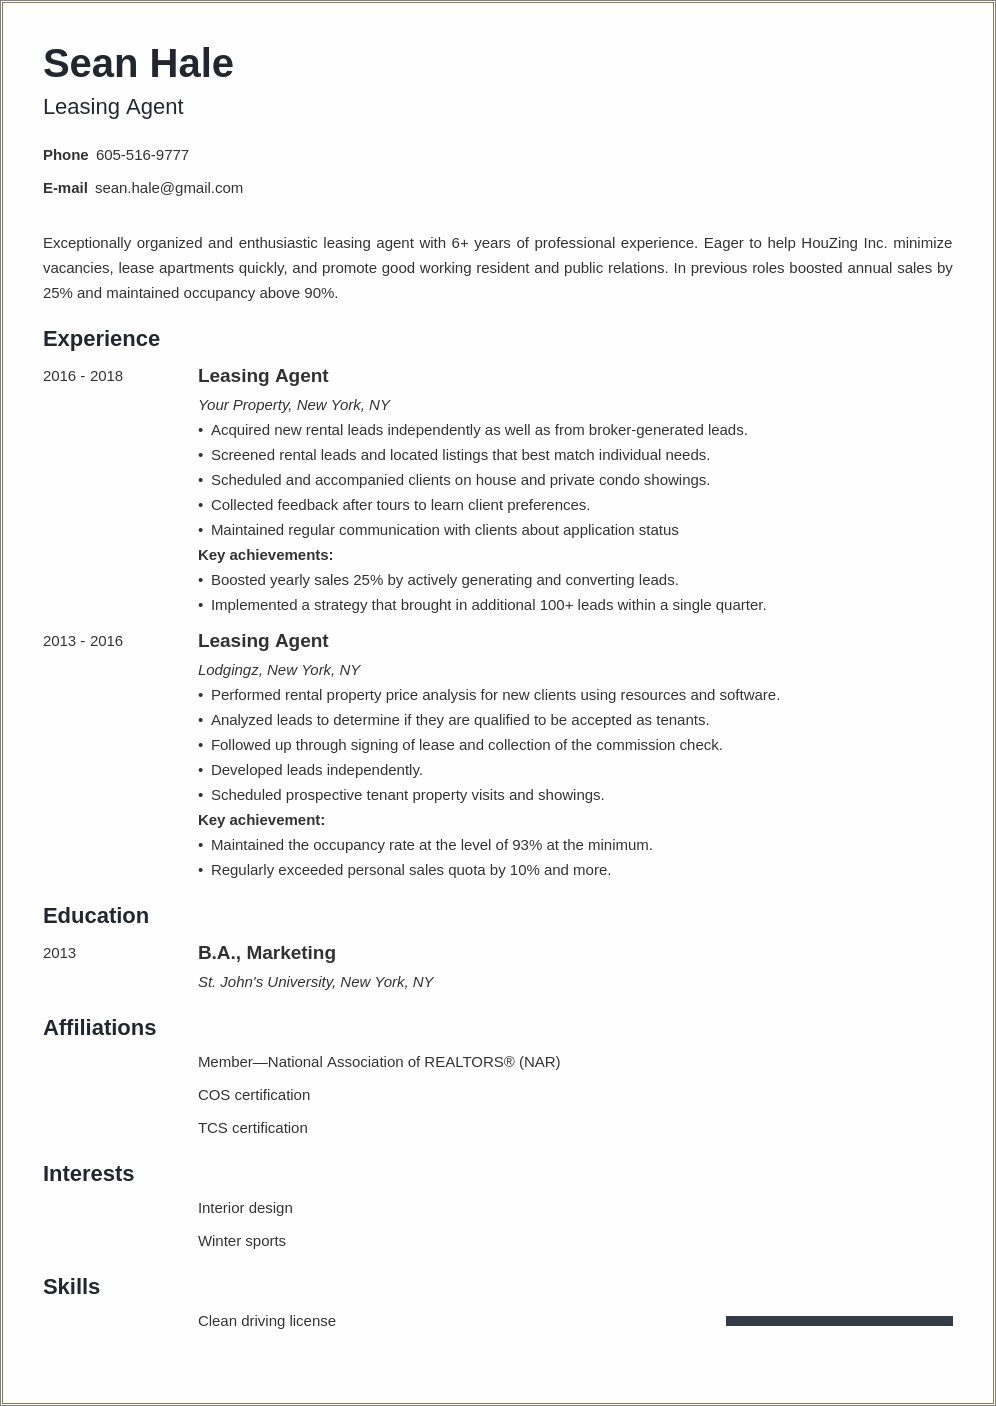 Leasing Application Specialist Job Description For Resume